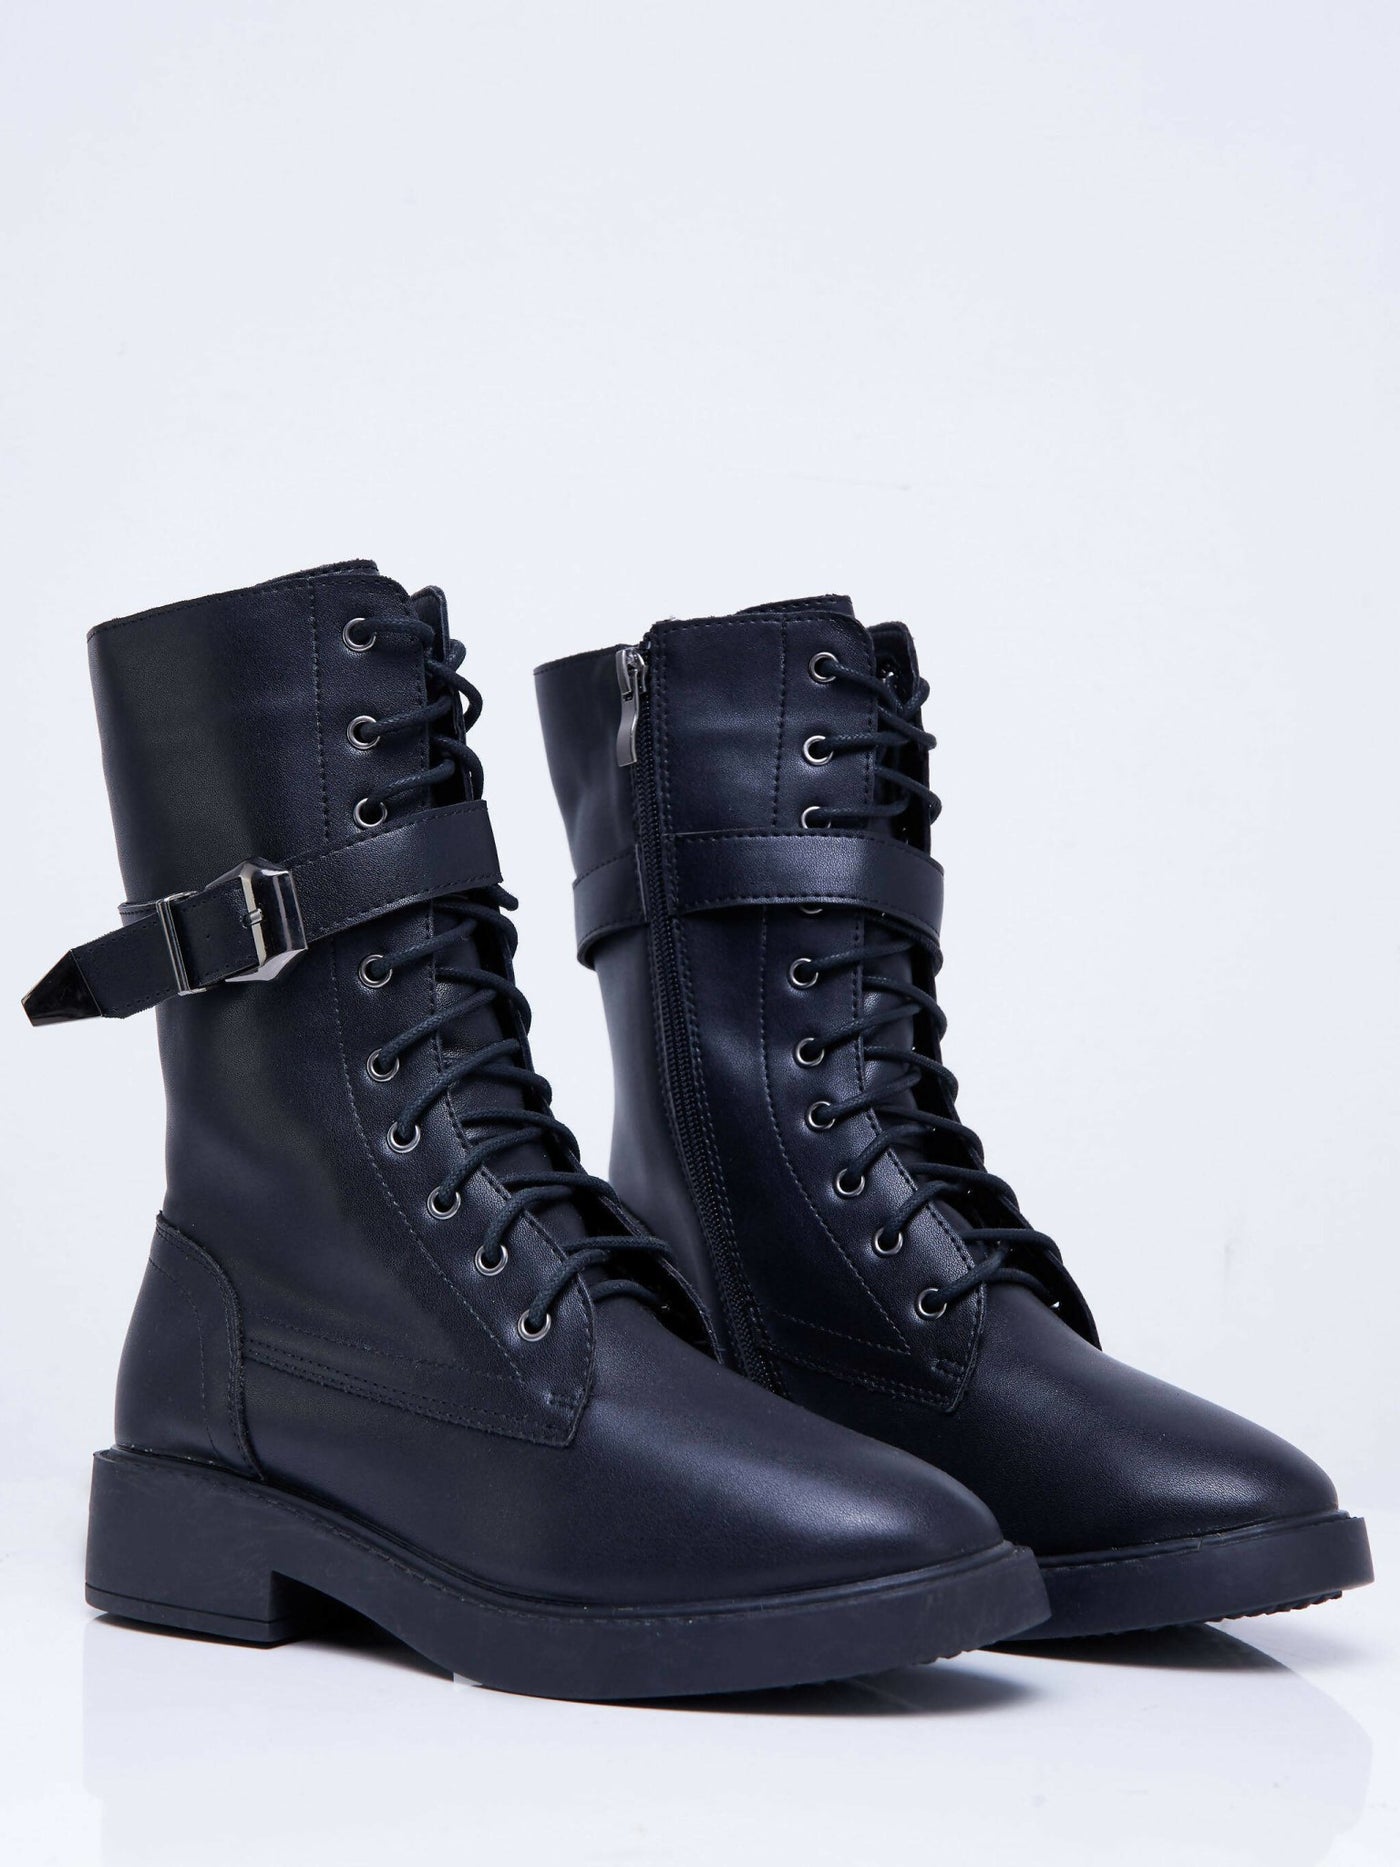 Lizola Beautiful and Comfortable Ankle Boots Martin - Black - Shop Zetu Kenya